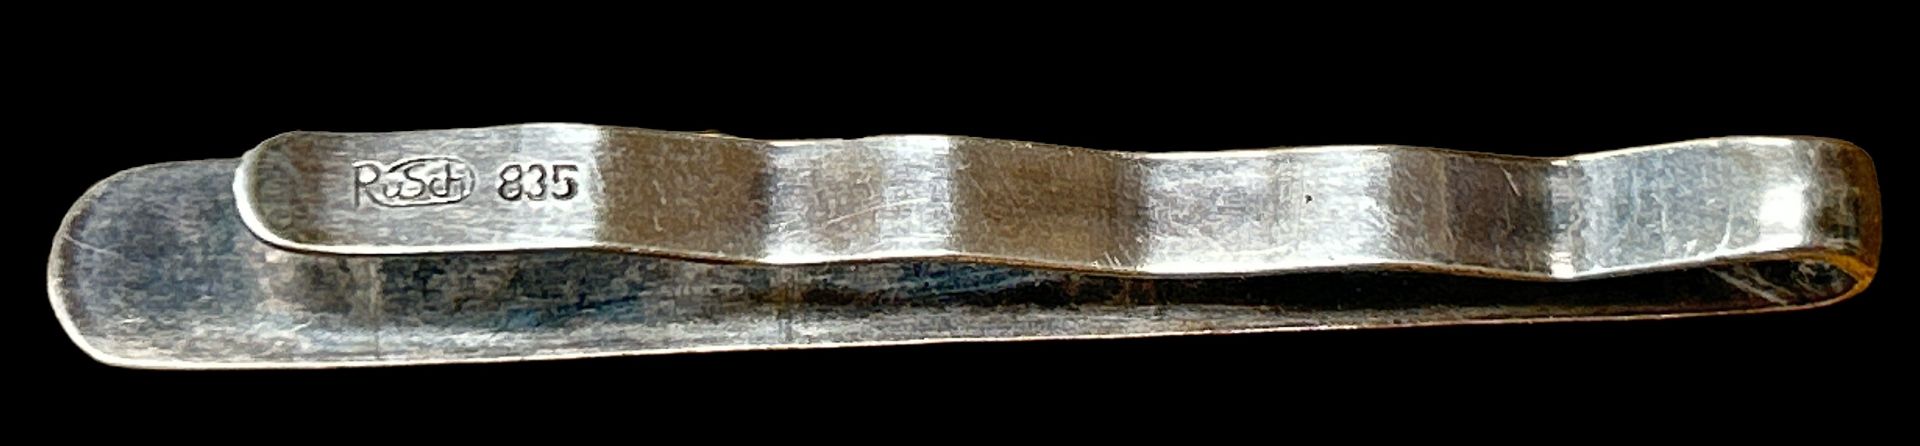 gr. Krawattenklammer, Silber-835- - Image 2 of 2